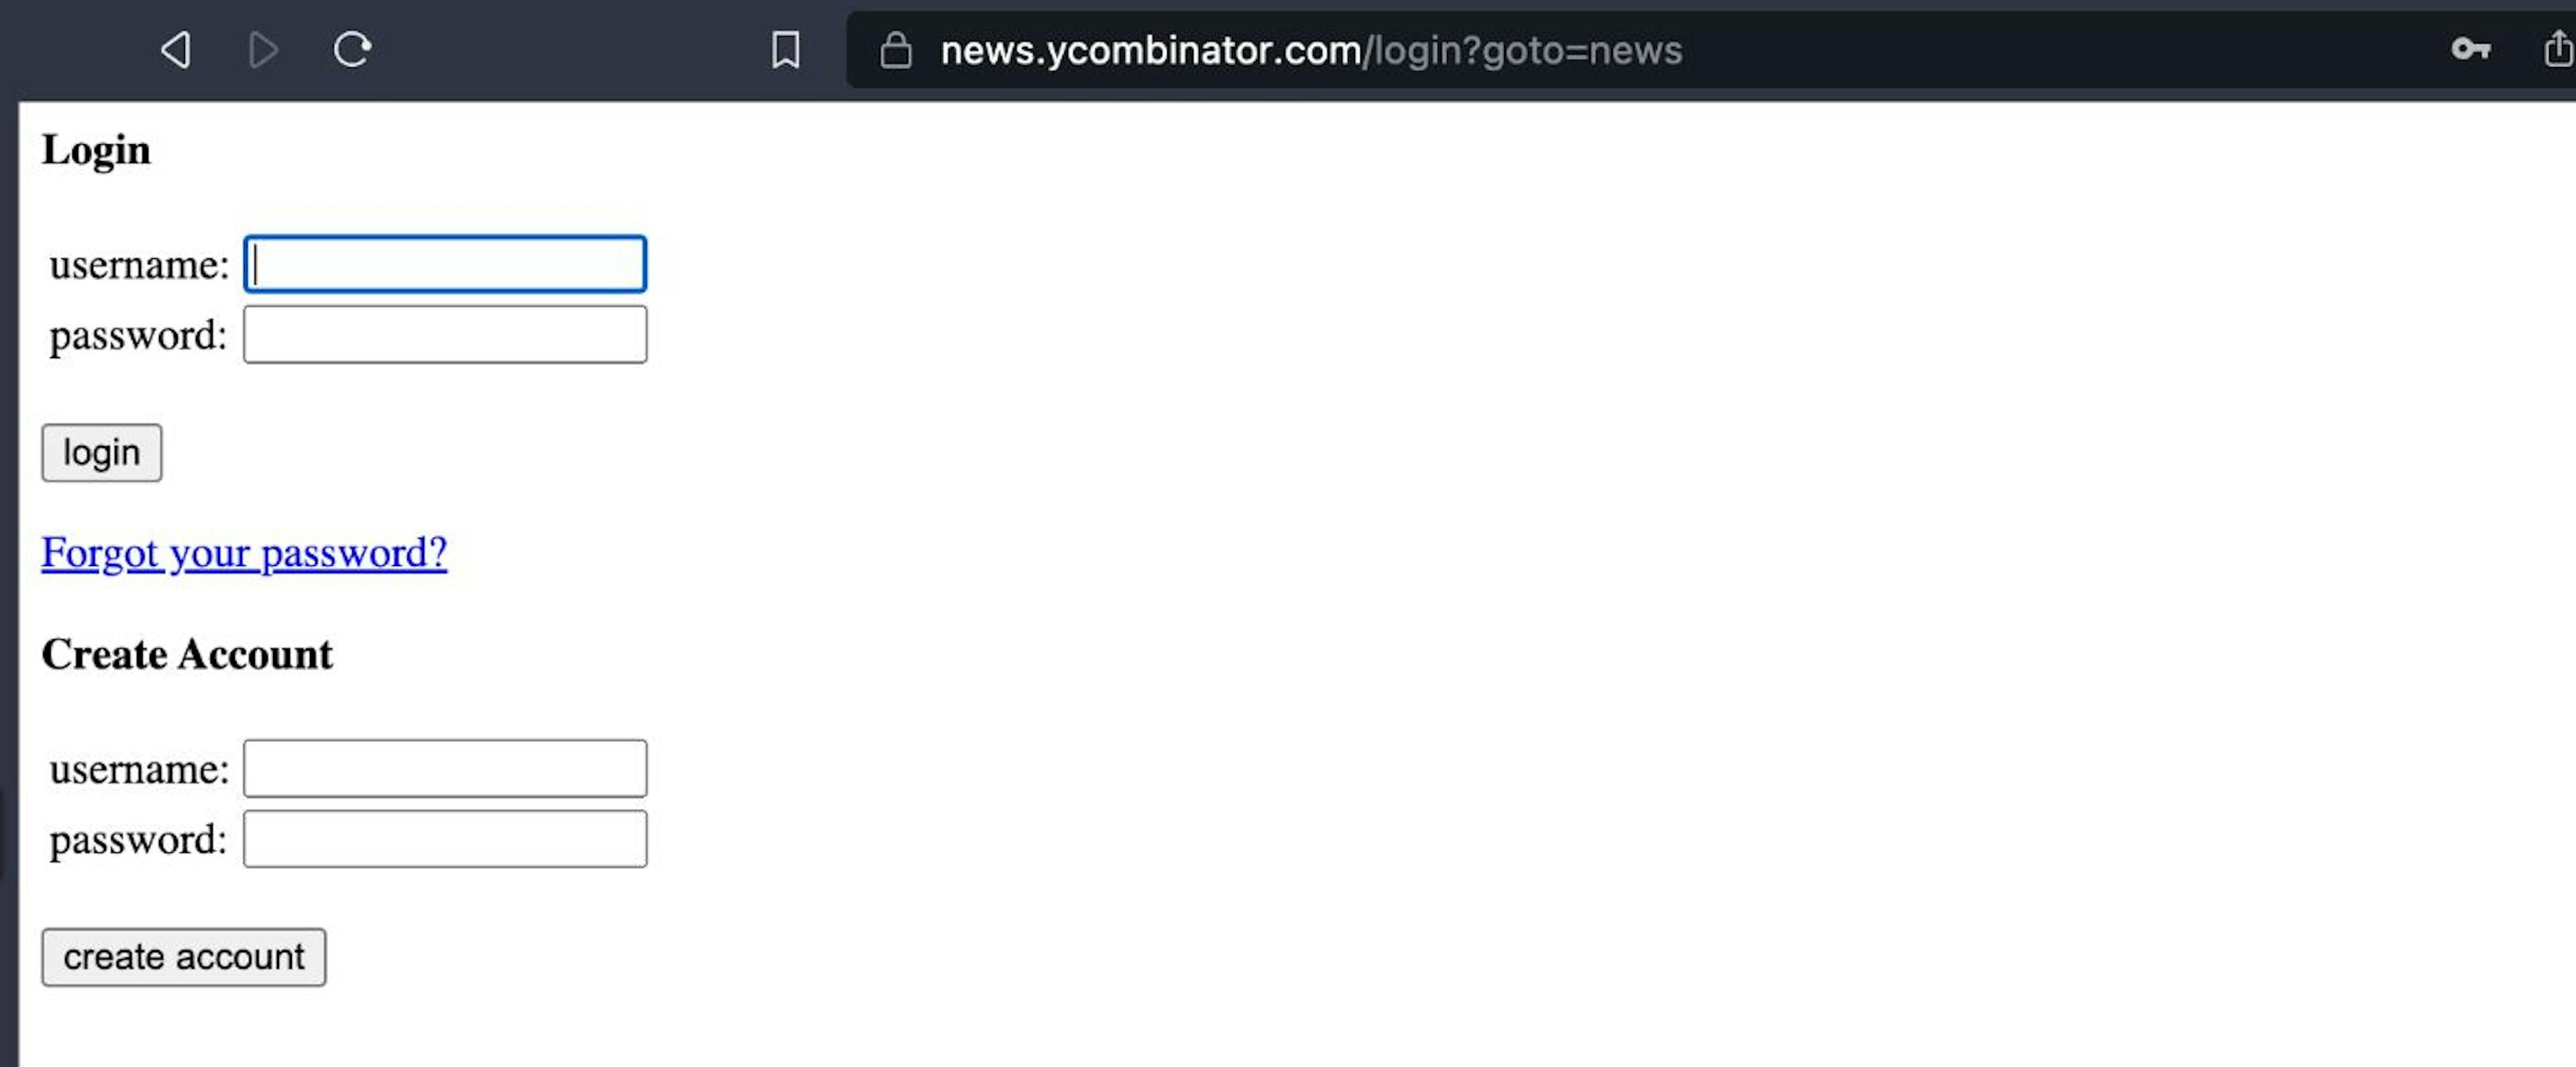 Página de login do YC Hacker News